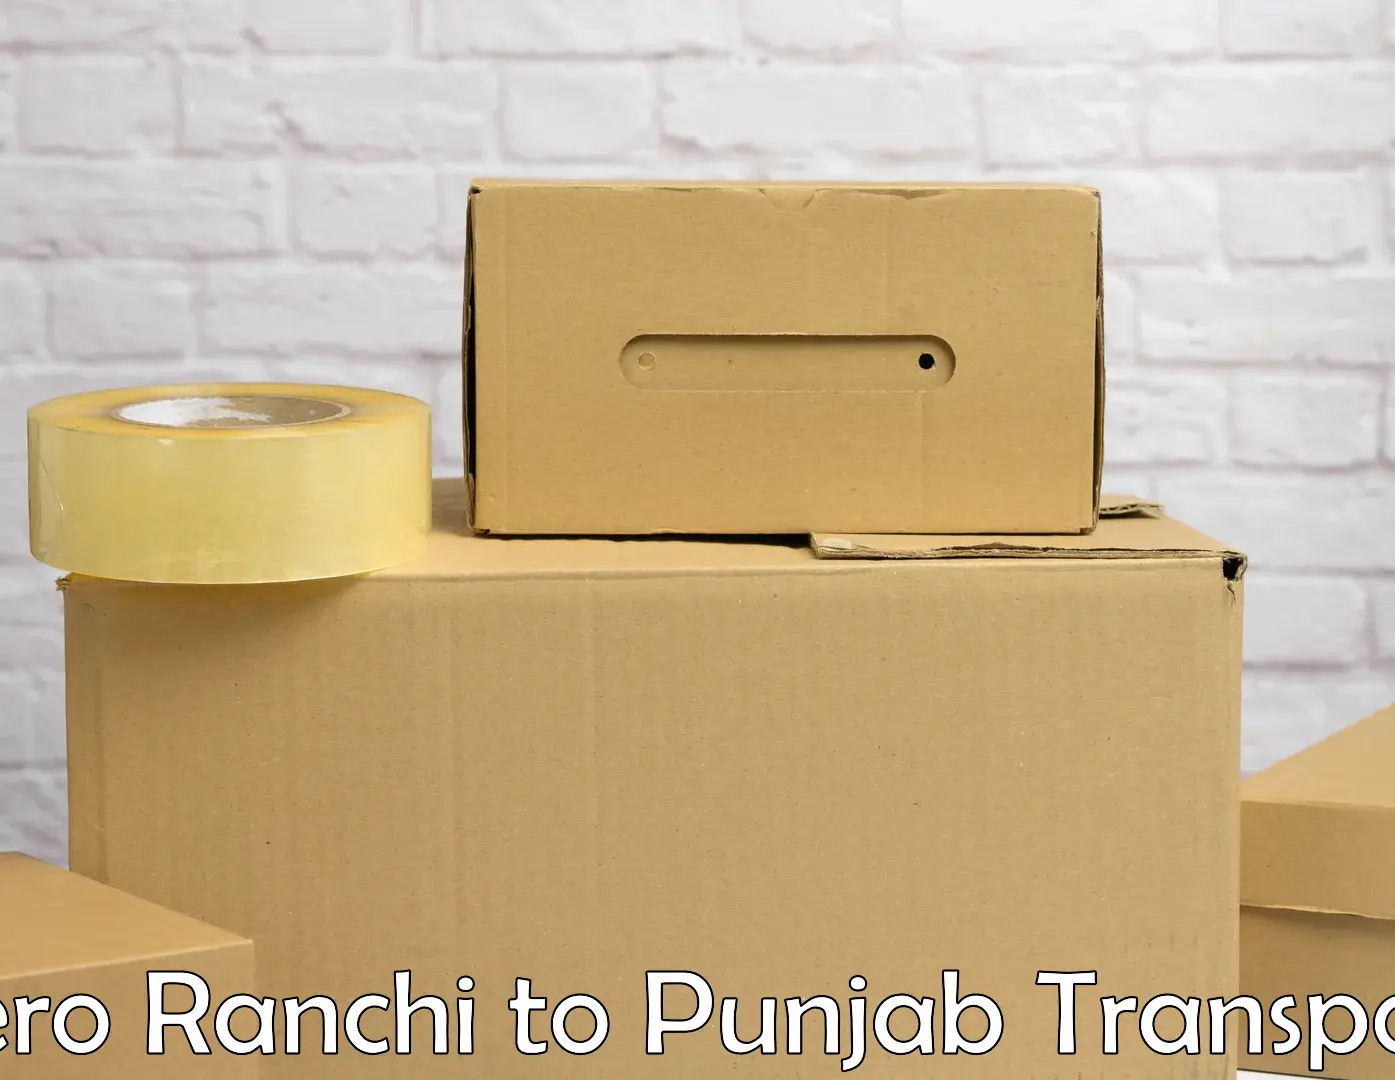 Transport shared services Bero Ranchi to Nawanshahr